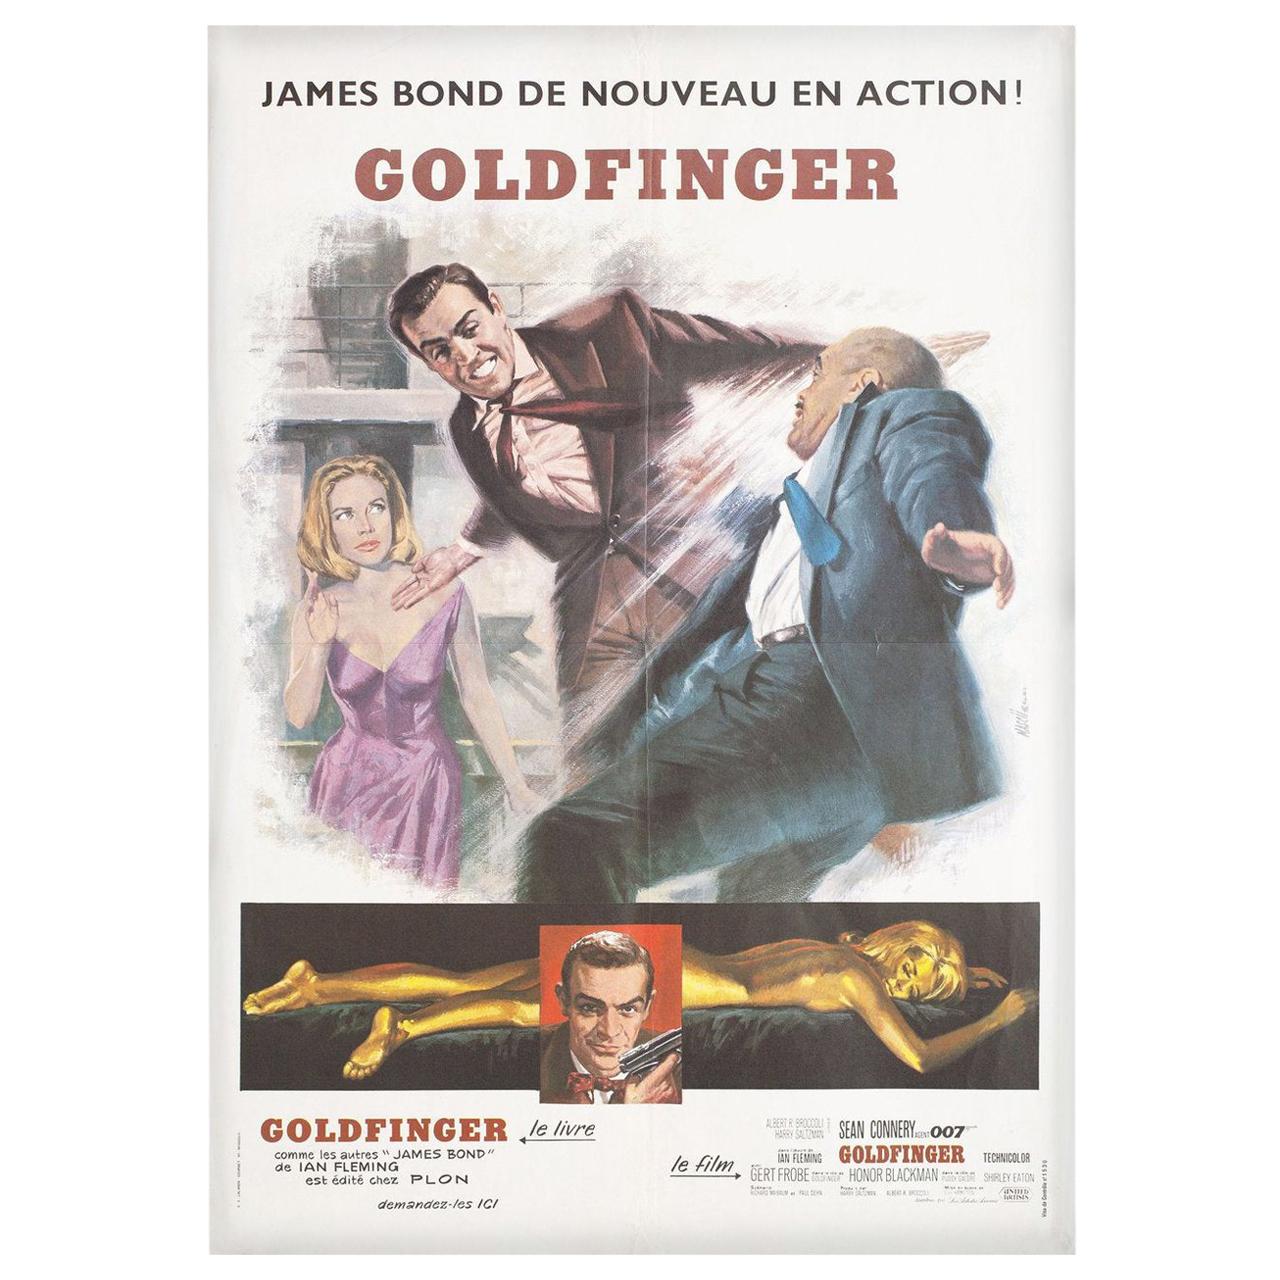 'Goldfinger' R1970s French Petite Film Poster